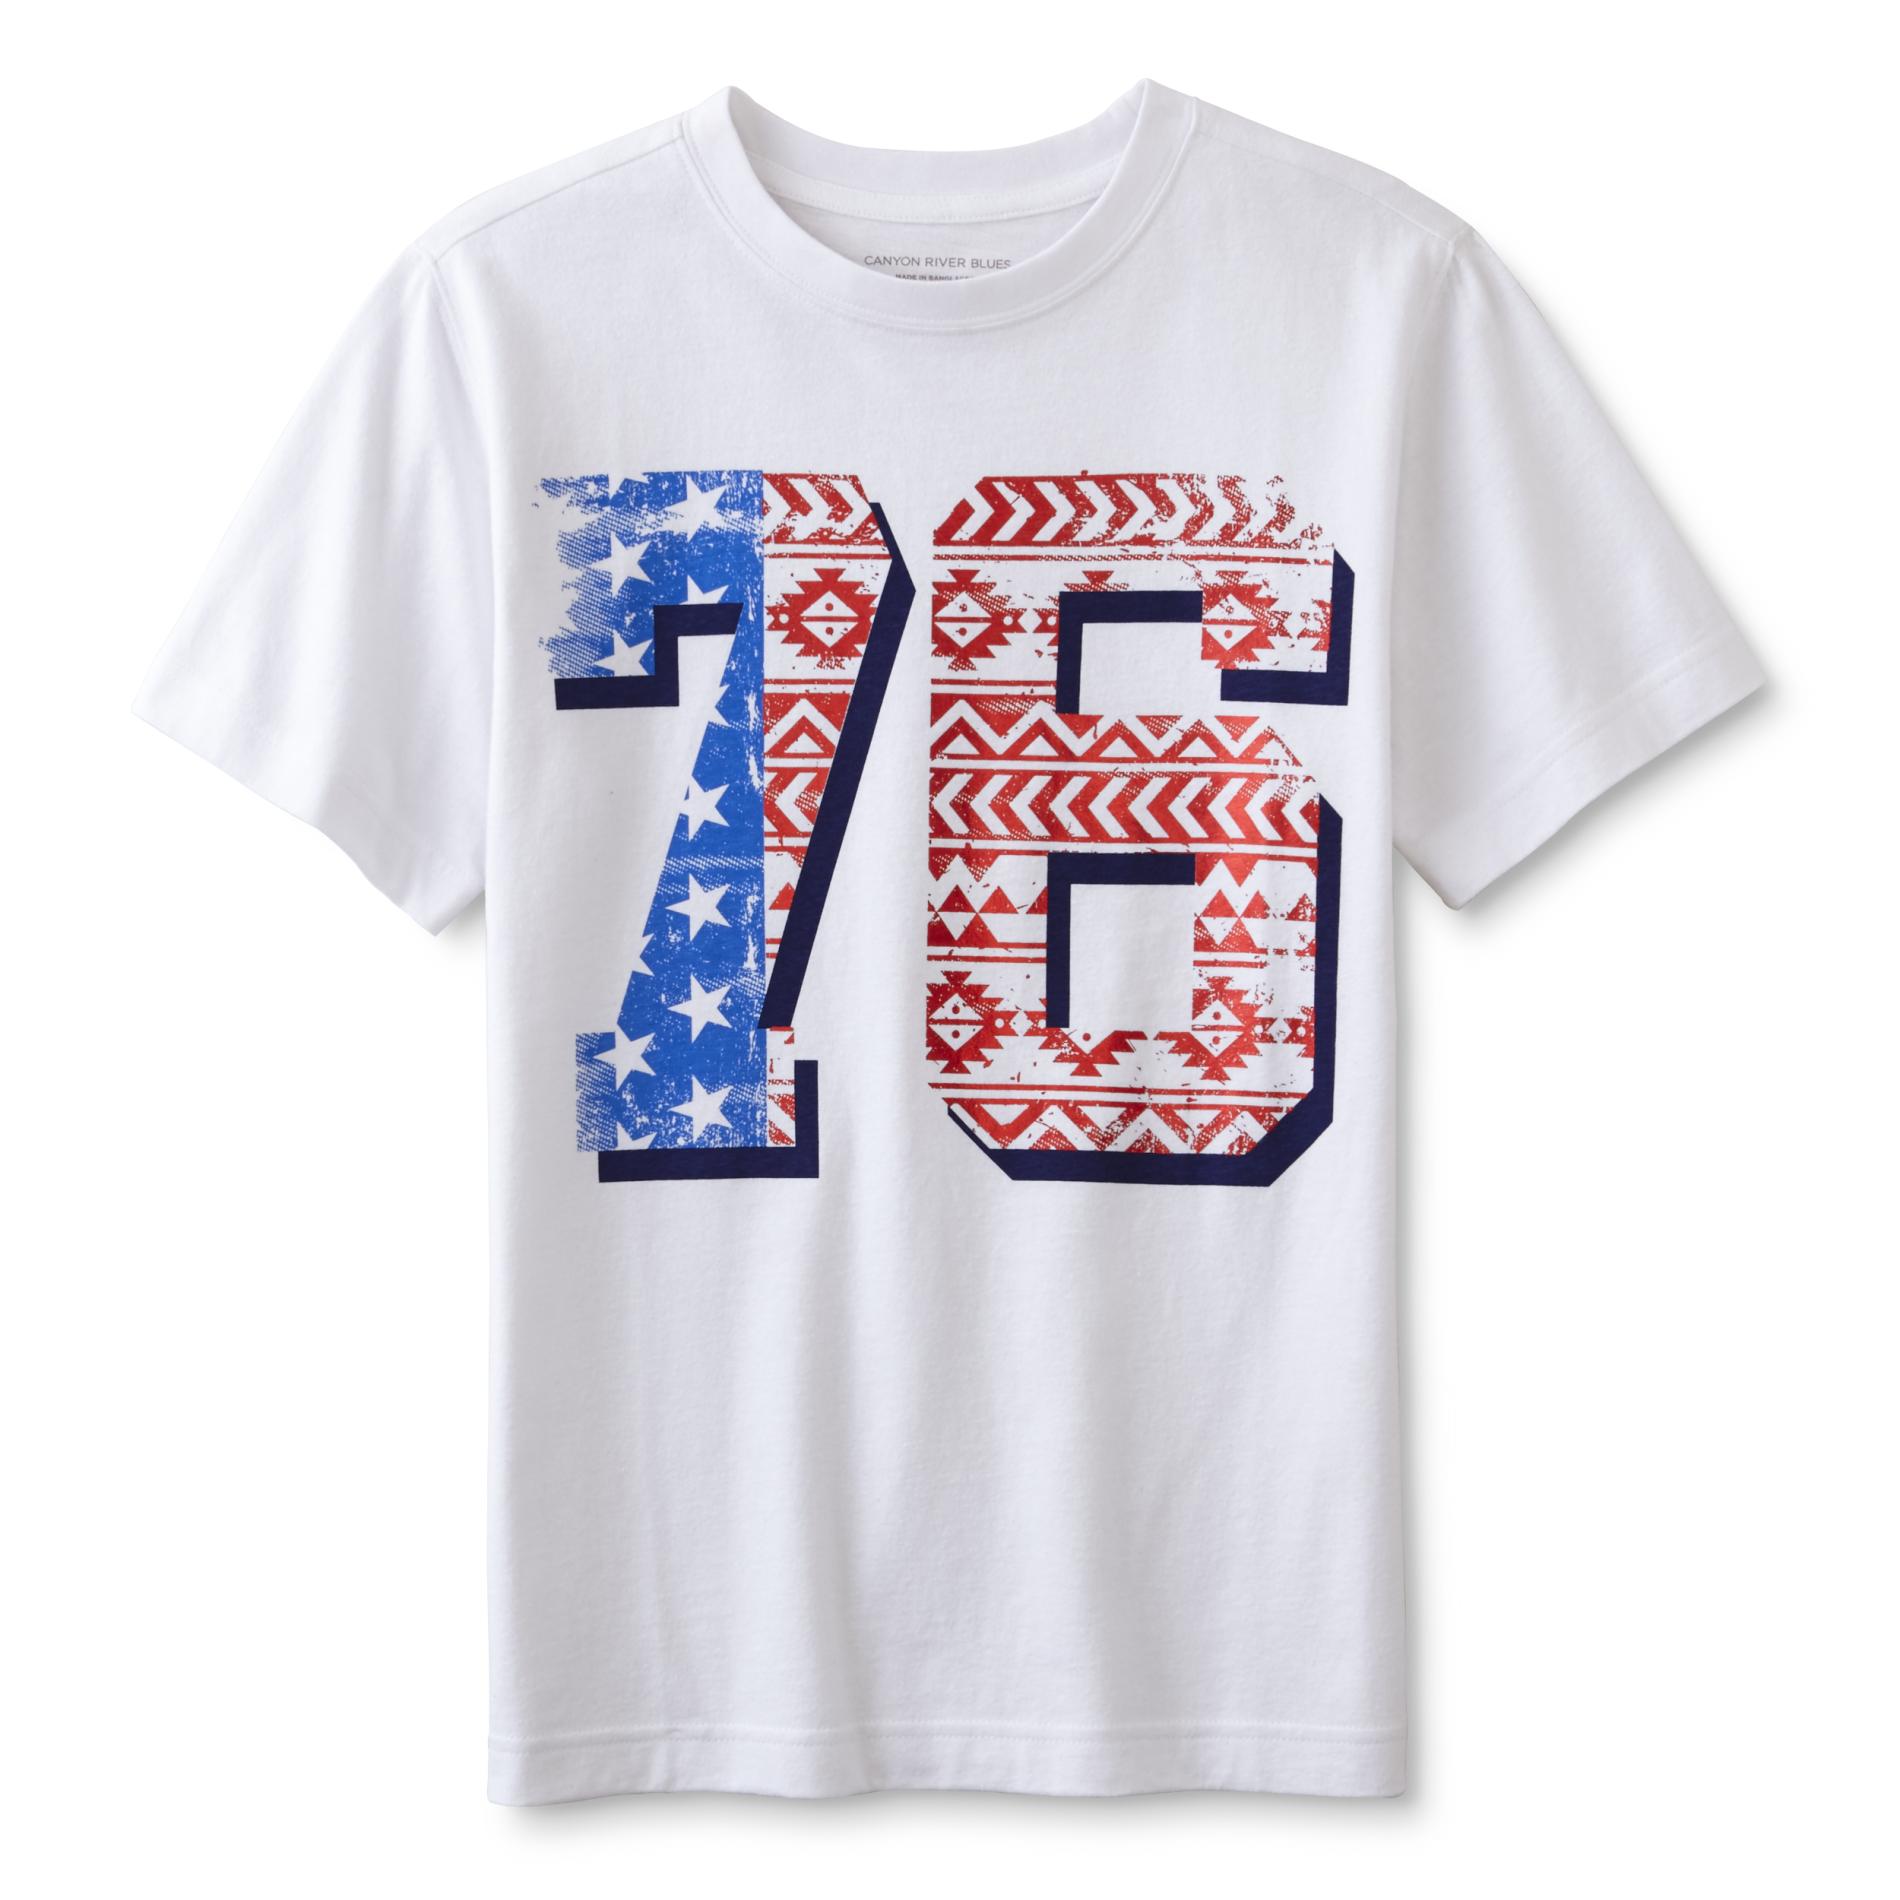 Boy's Graphic T-Shirt - Patriotic & Tribal